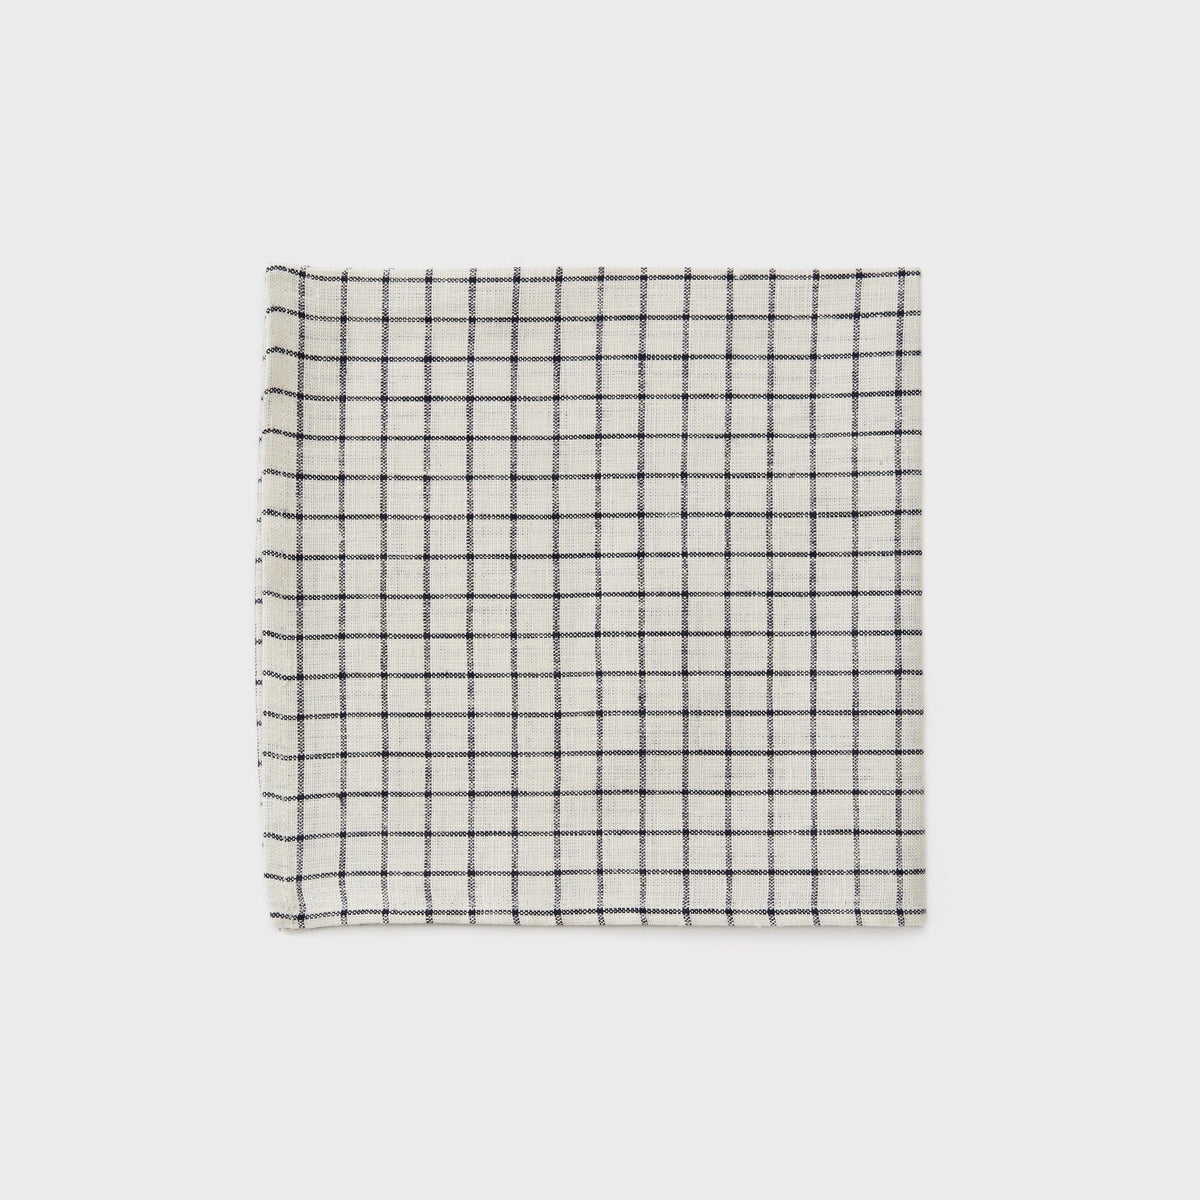 Fog Linen, Japanese Linen Napkin, ivory and navy grid, - Placewares